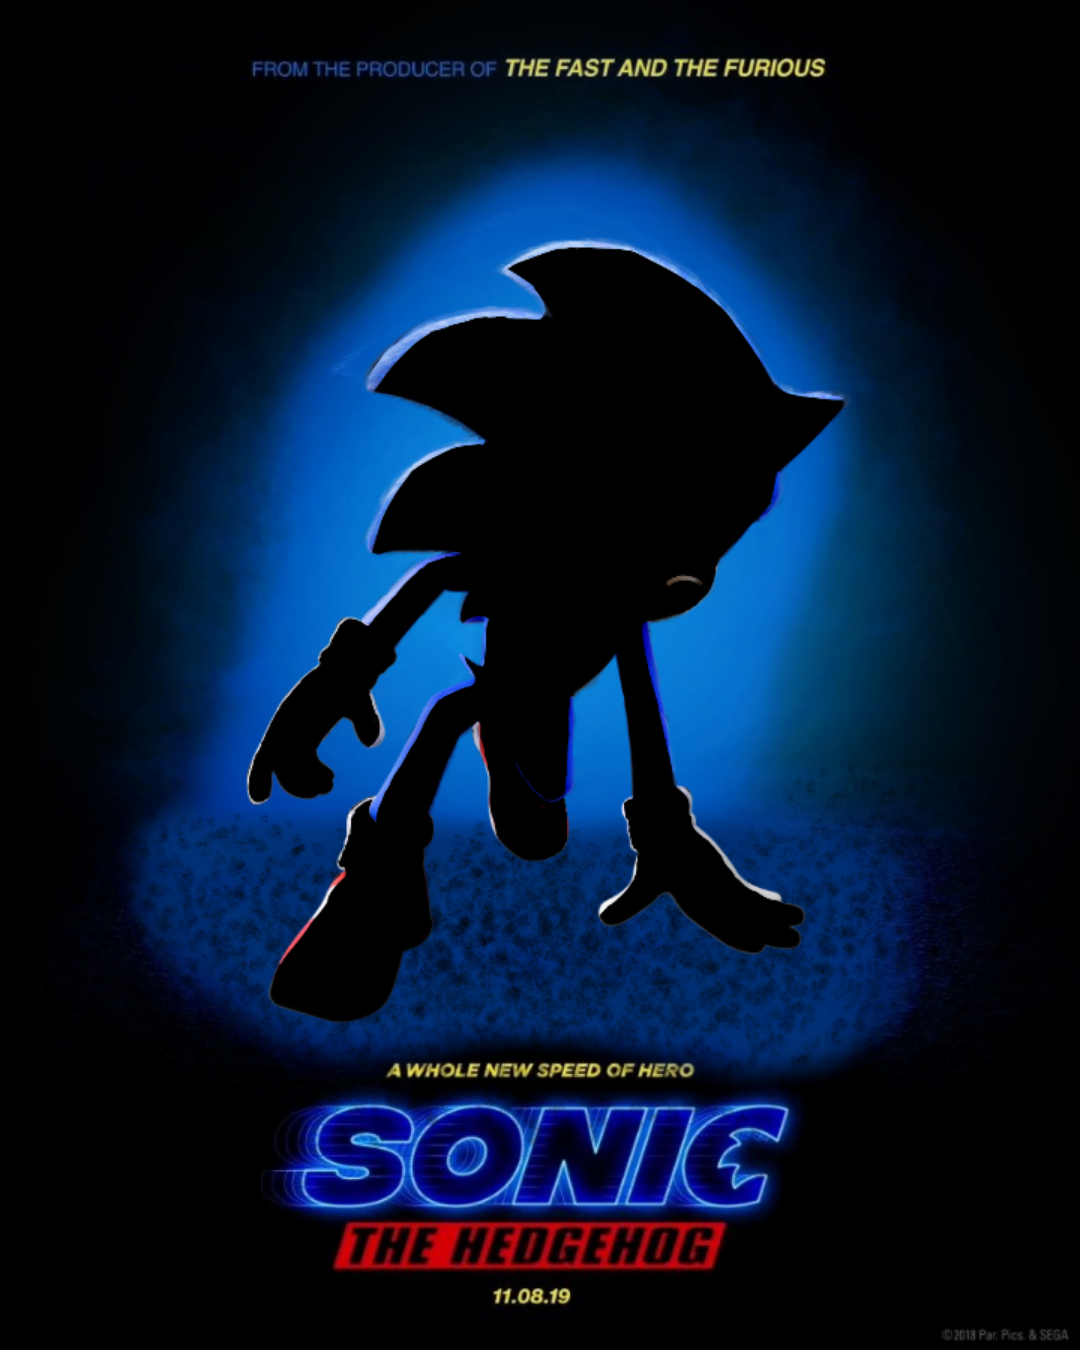 Custom Sonic The Hedgehog 4 poster revised by Nikisawesom on DeviantArt